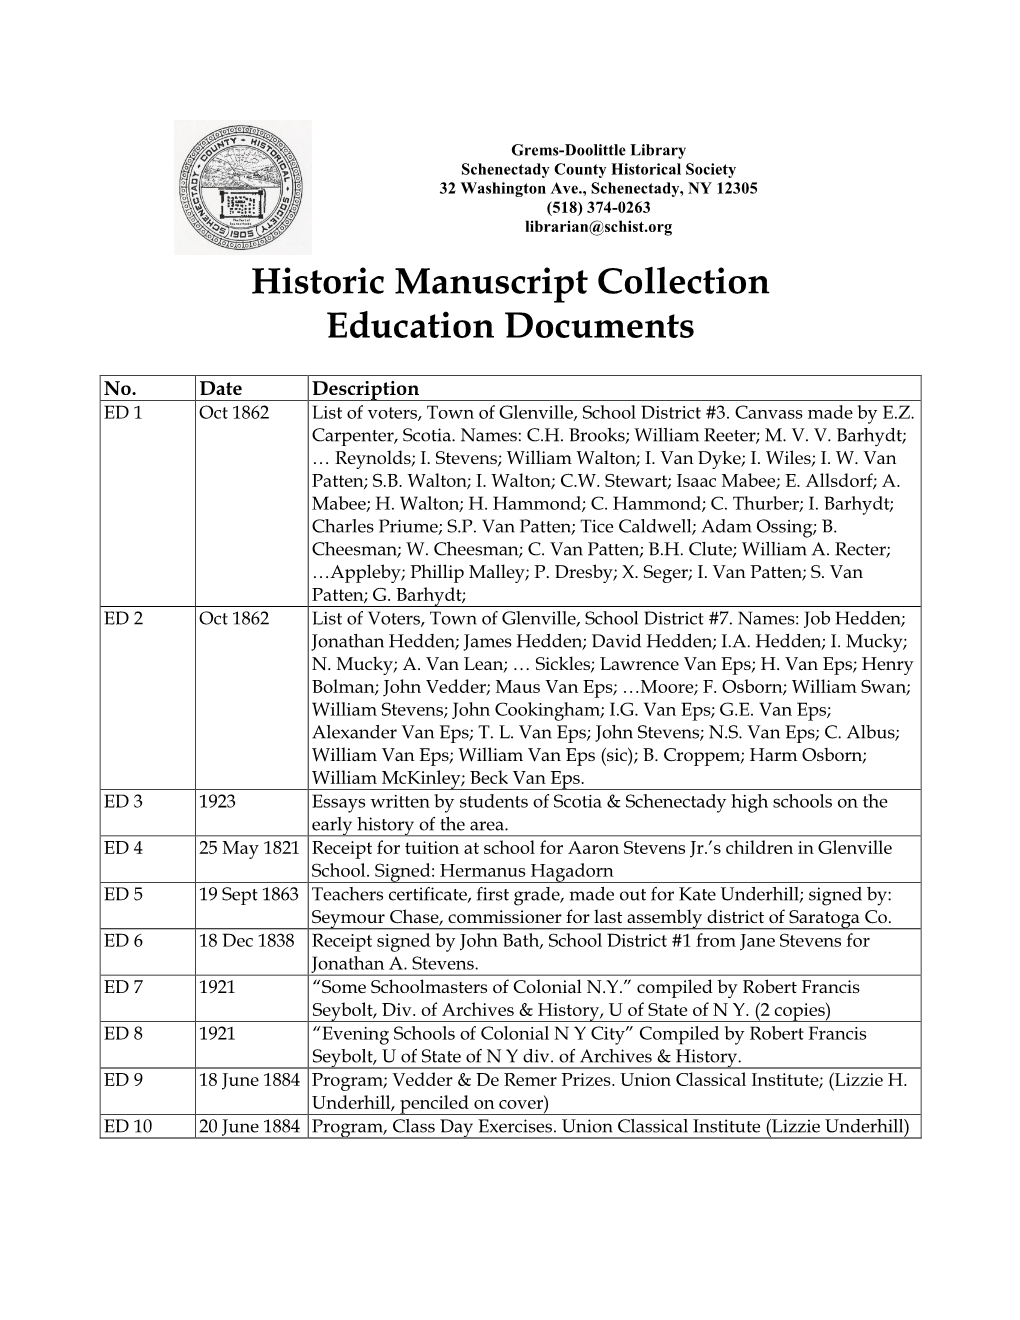 Historic Manuscript Collection Education Documents